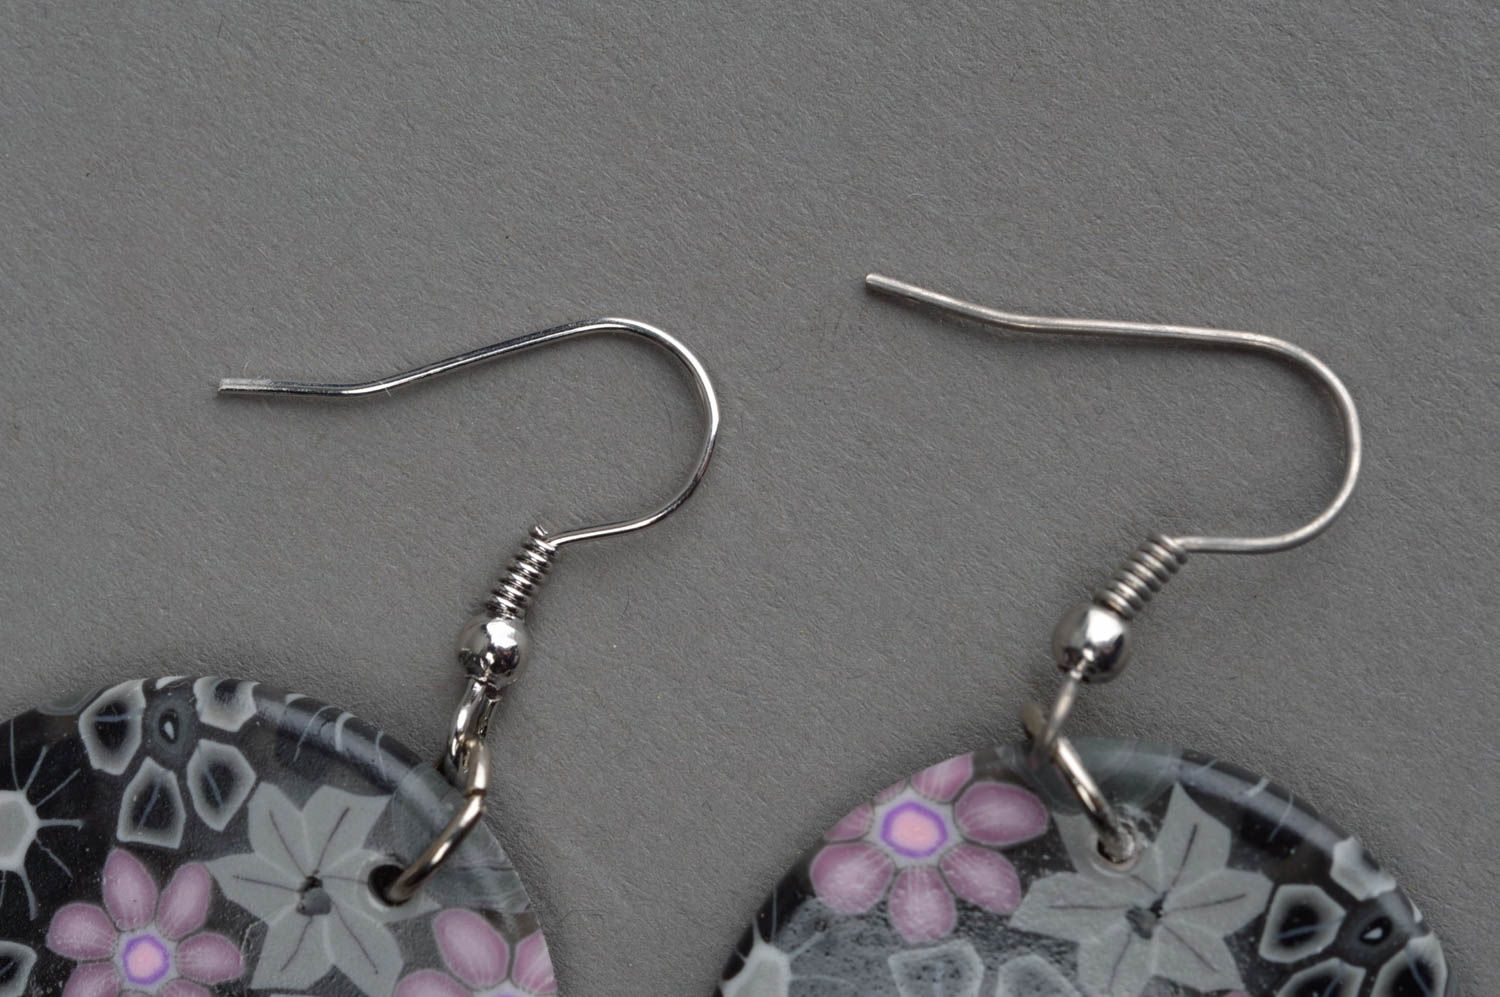 Handmade polymer clay earrings earrings with charms soutache earrings for women photo 4